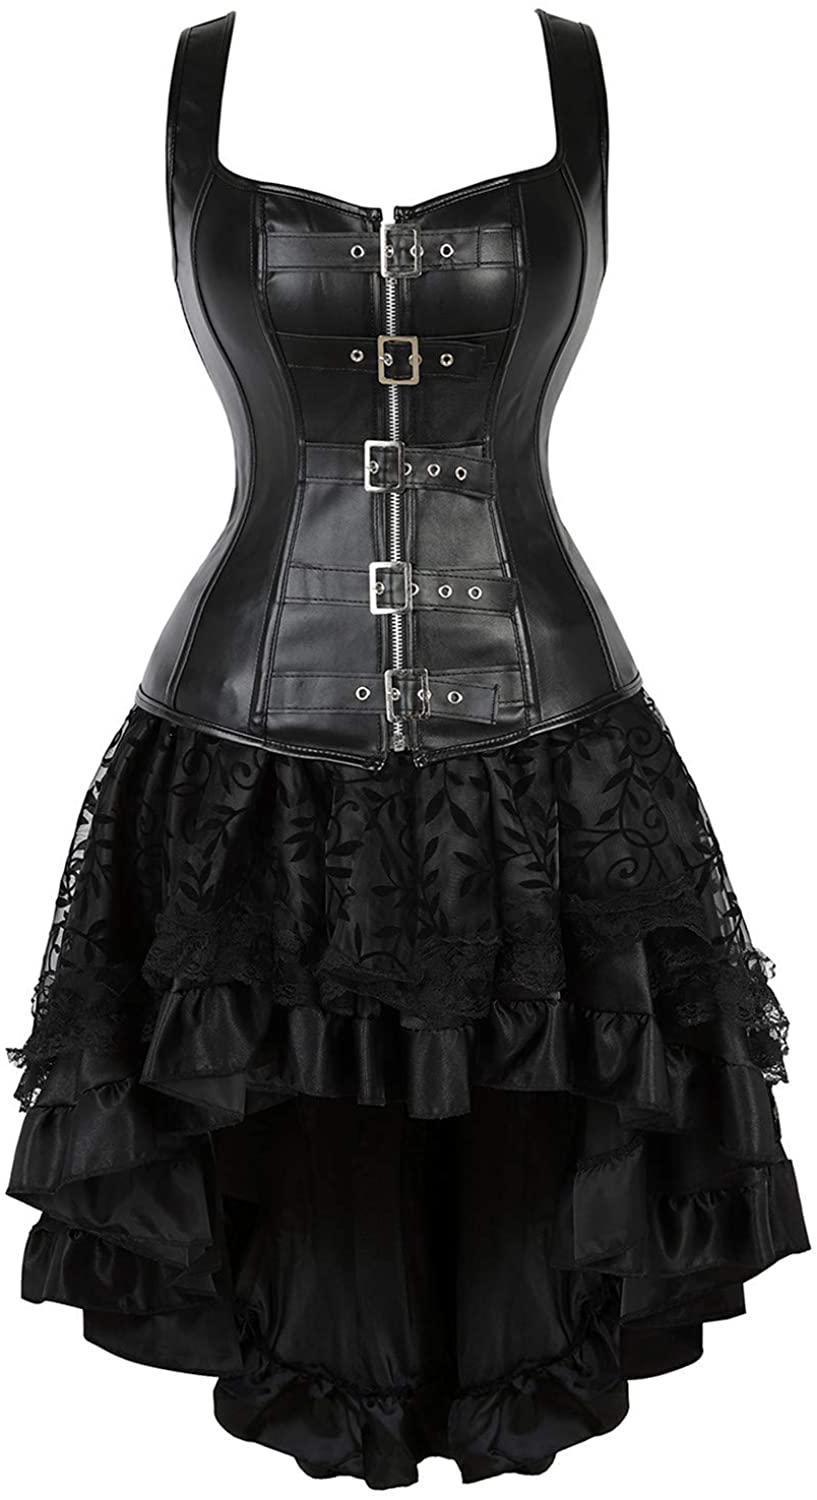 Kranchungel Steampunk Corset Skirt Renaissance Corset Dress for Women Gothic Burlesque Corsets Costumes 